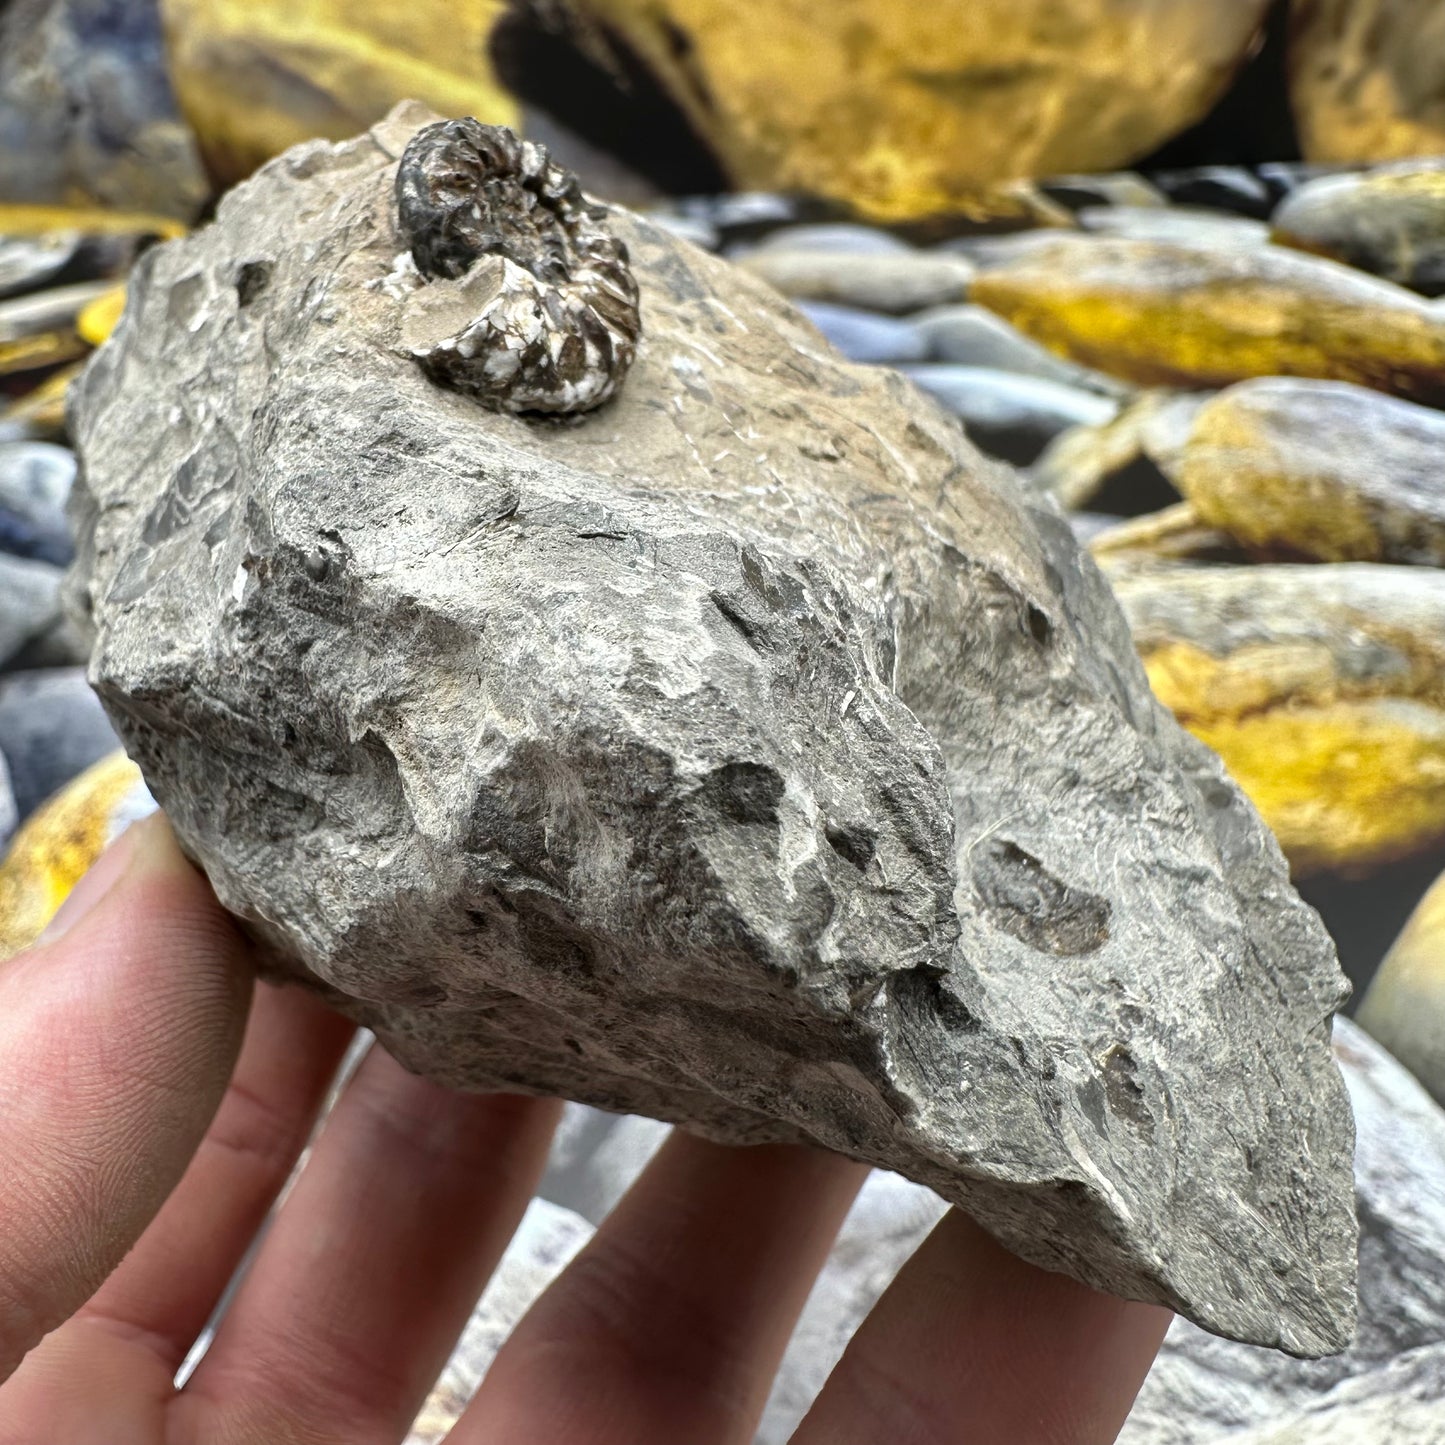 Amaltheus subnodosus ammonite fossil - Whitby, North Yorkshire Jurassic Coast, Yorkshire Fossils